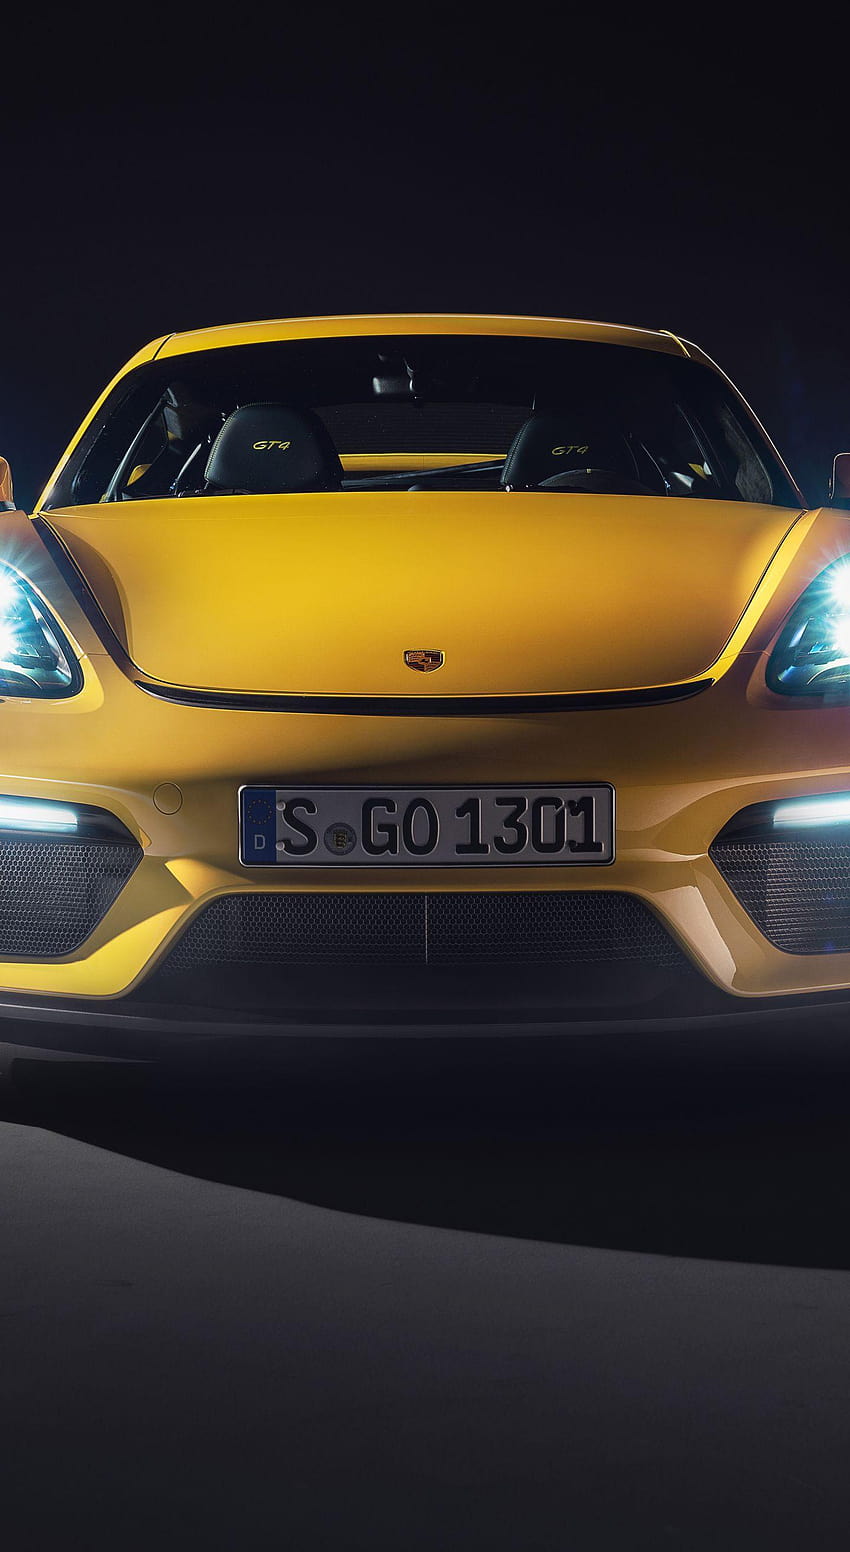 Pin on Samochody, 2019 żółty samochód sportowy porsche 718 cayman gt4 Tapeta na telefon HD